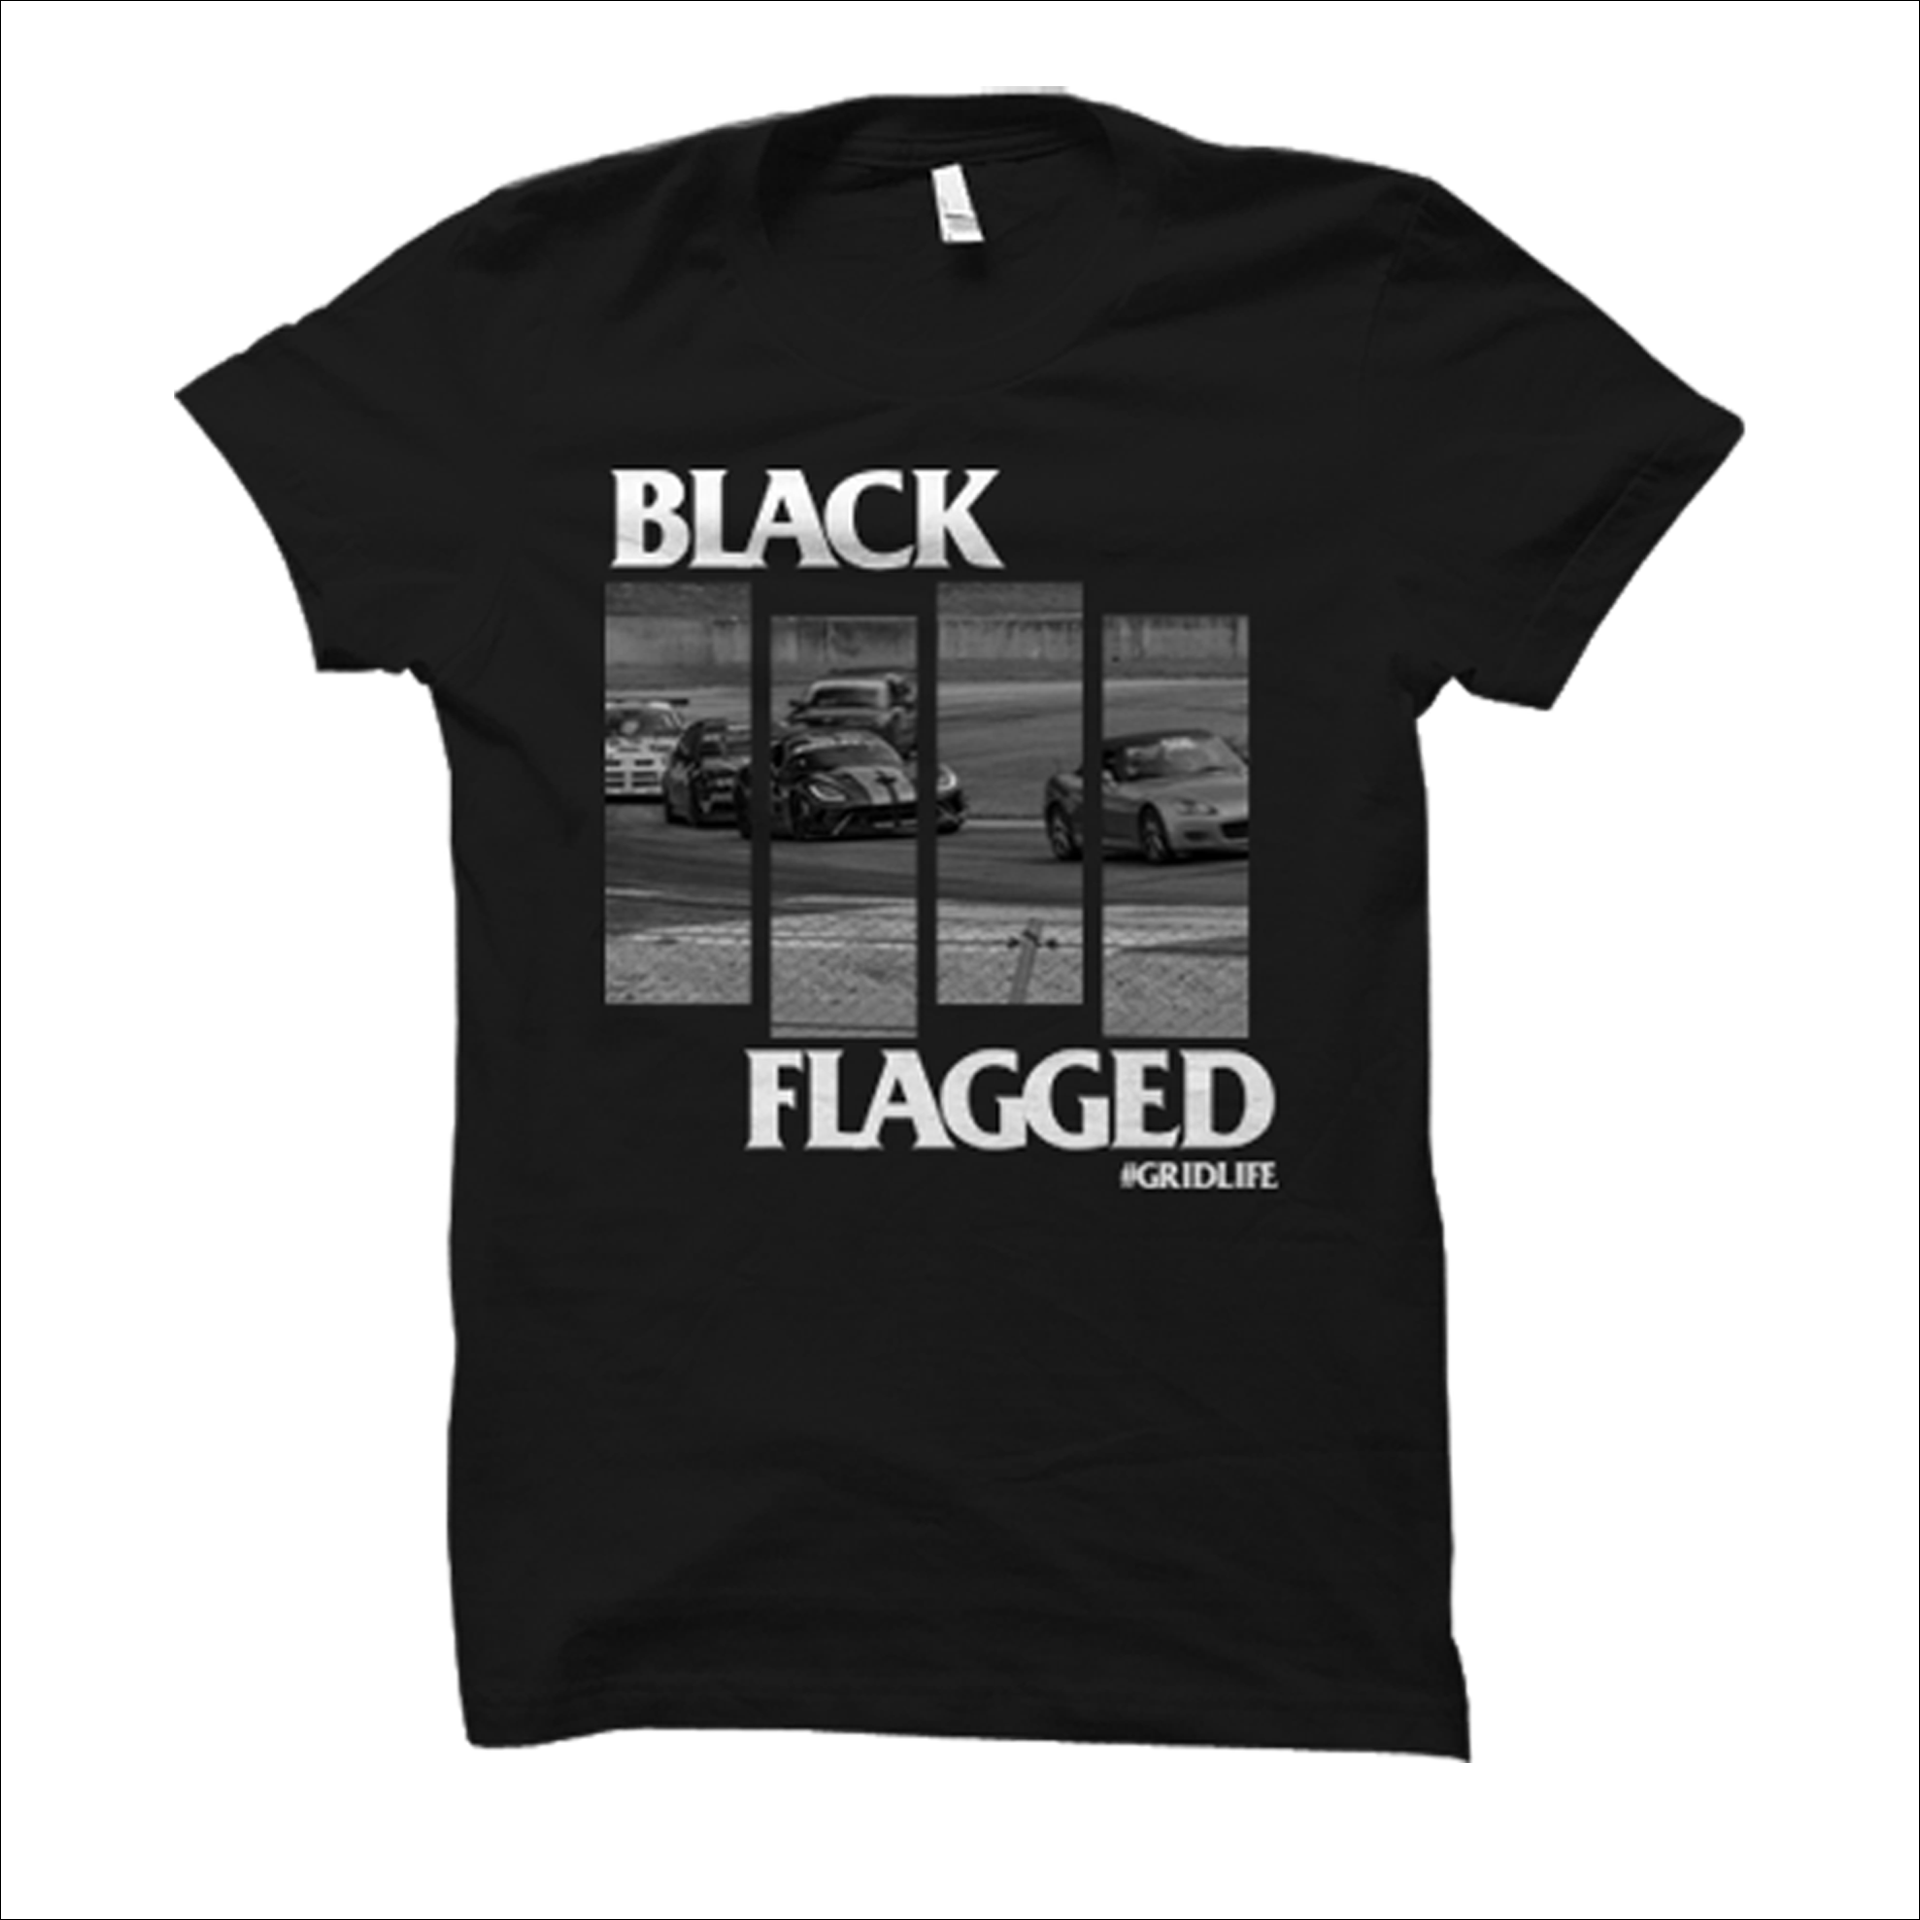 GRIDLIFE throwback Black Flagged t-shirt 